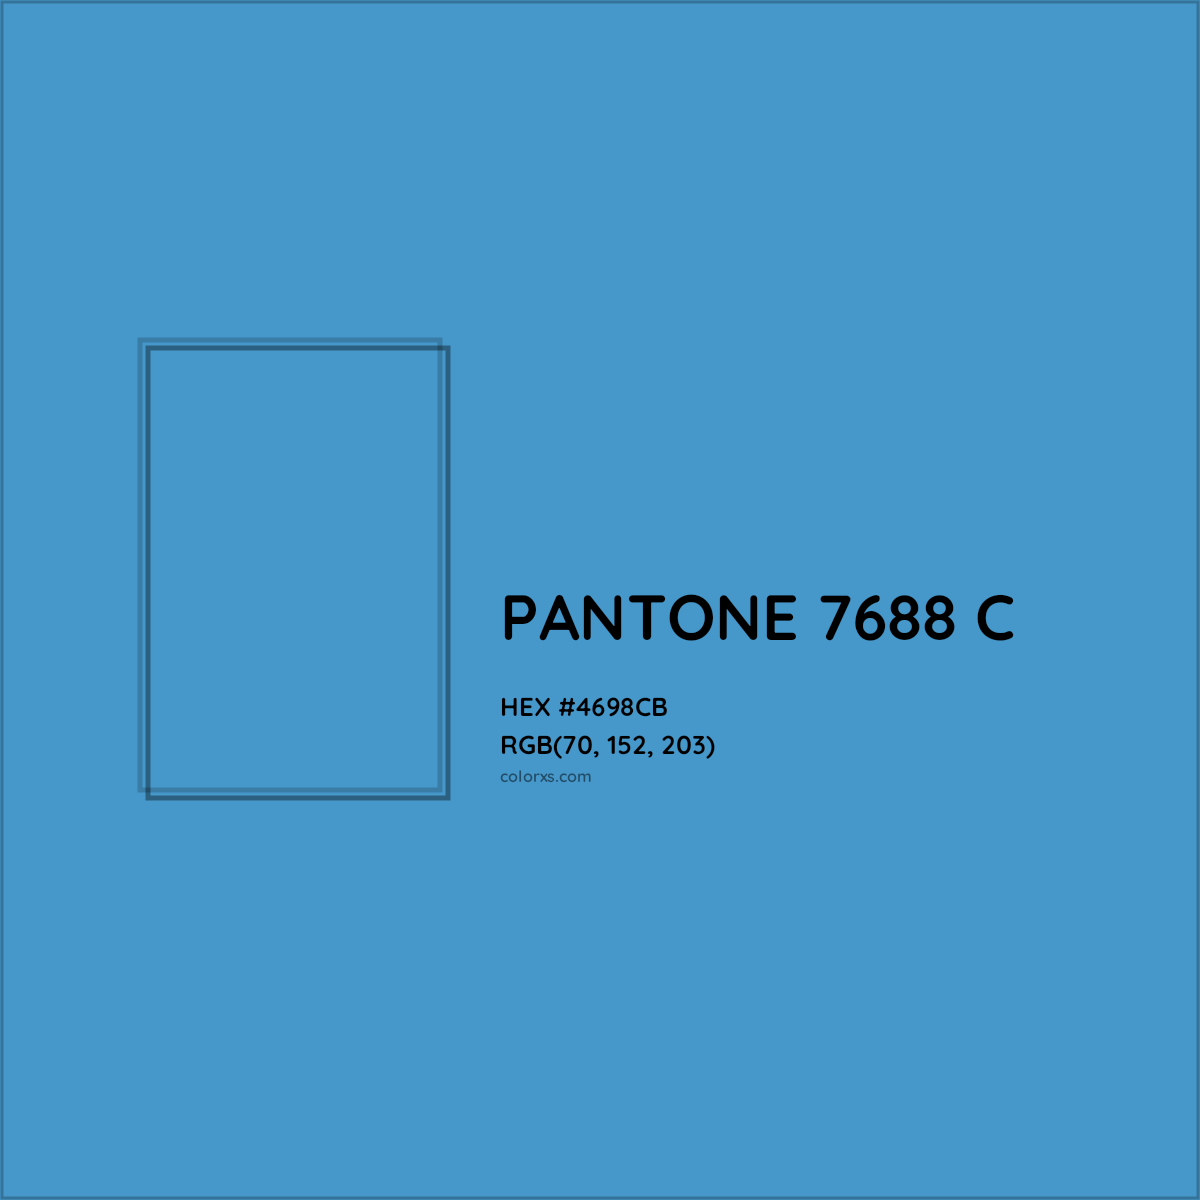 HEX #4698CB PANTONE 7688 C CMS Pantone PMS - Color Code